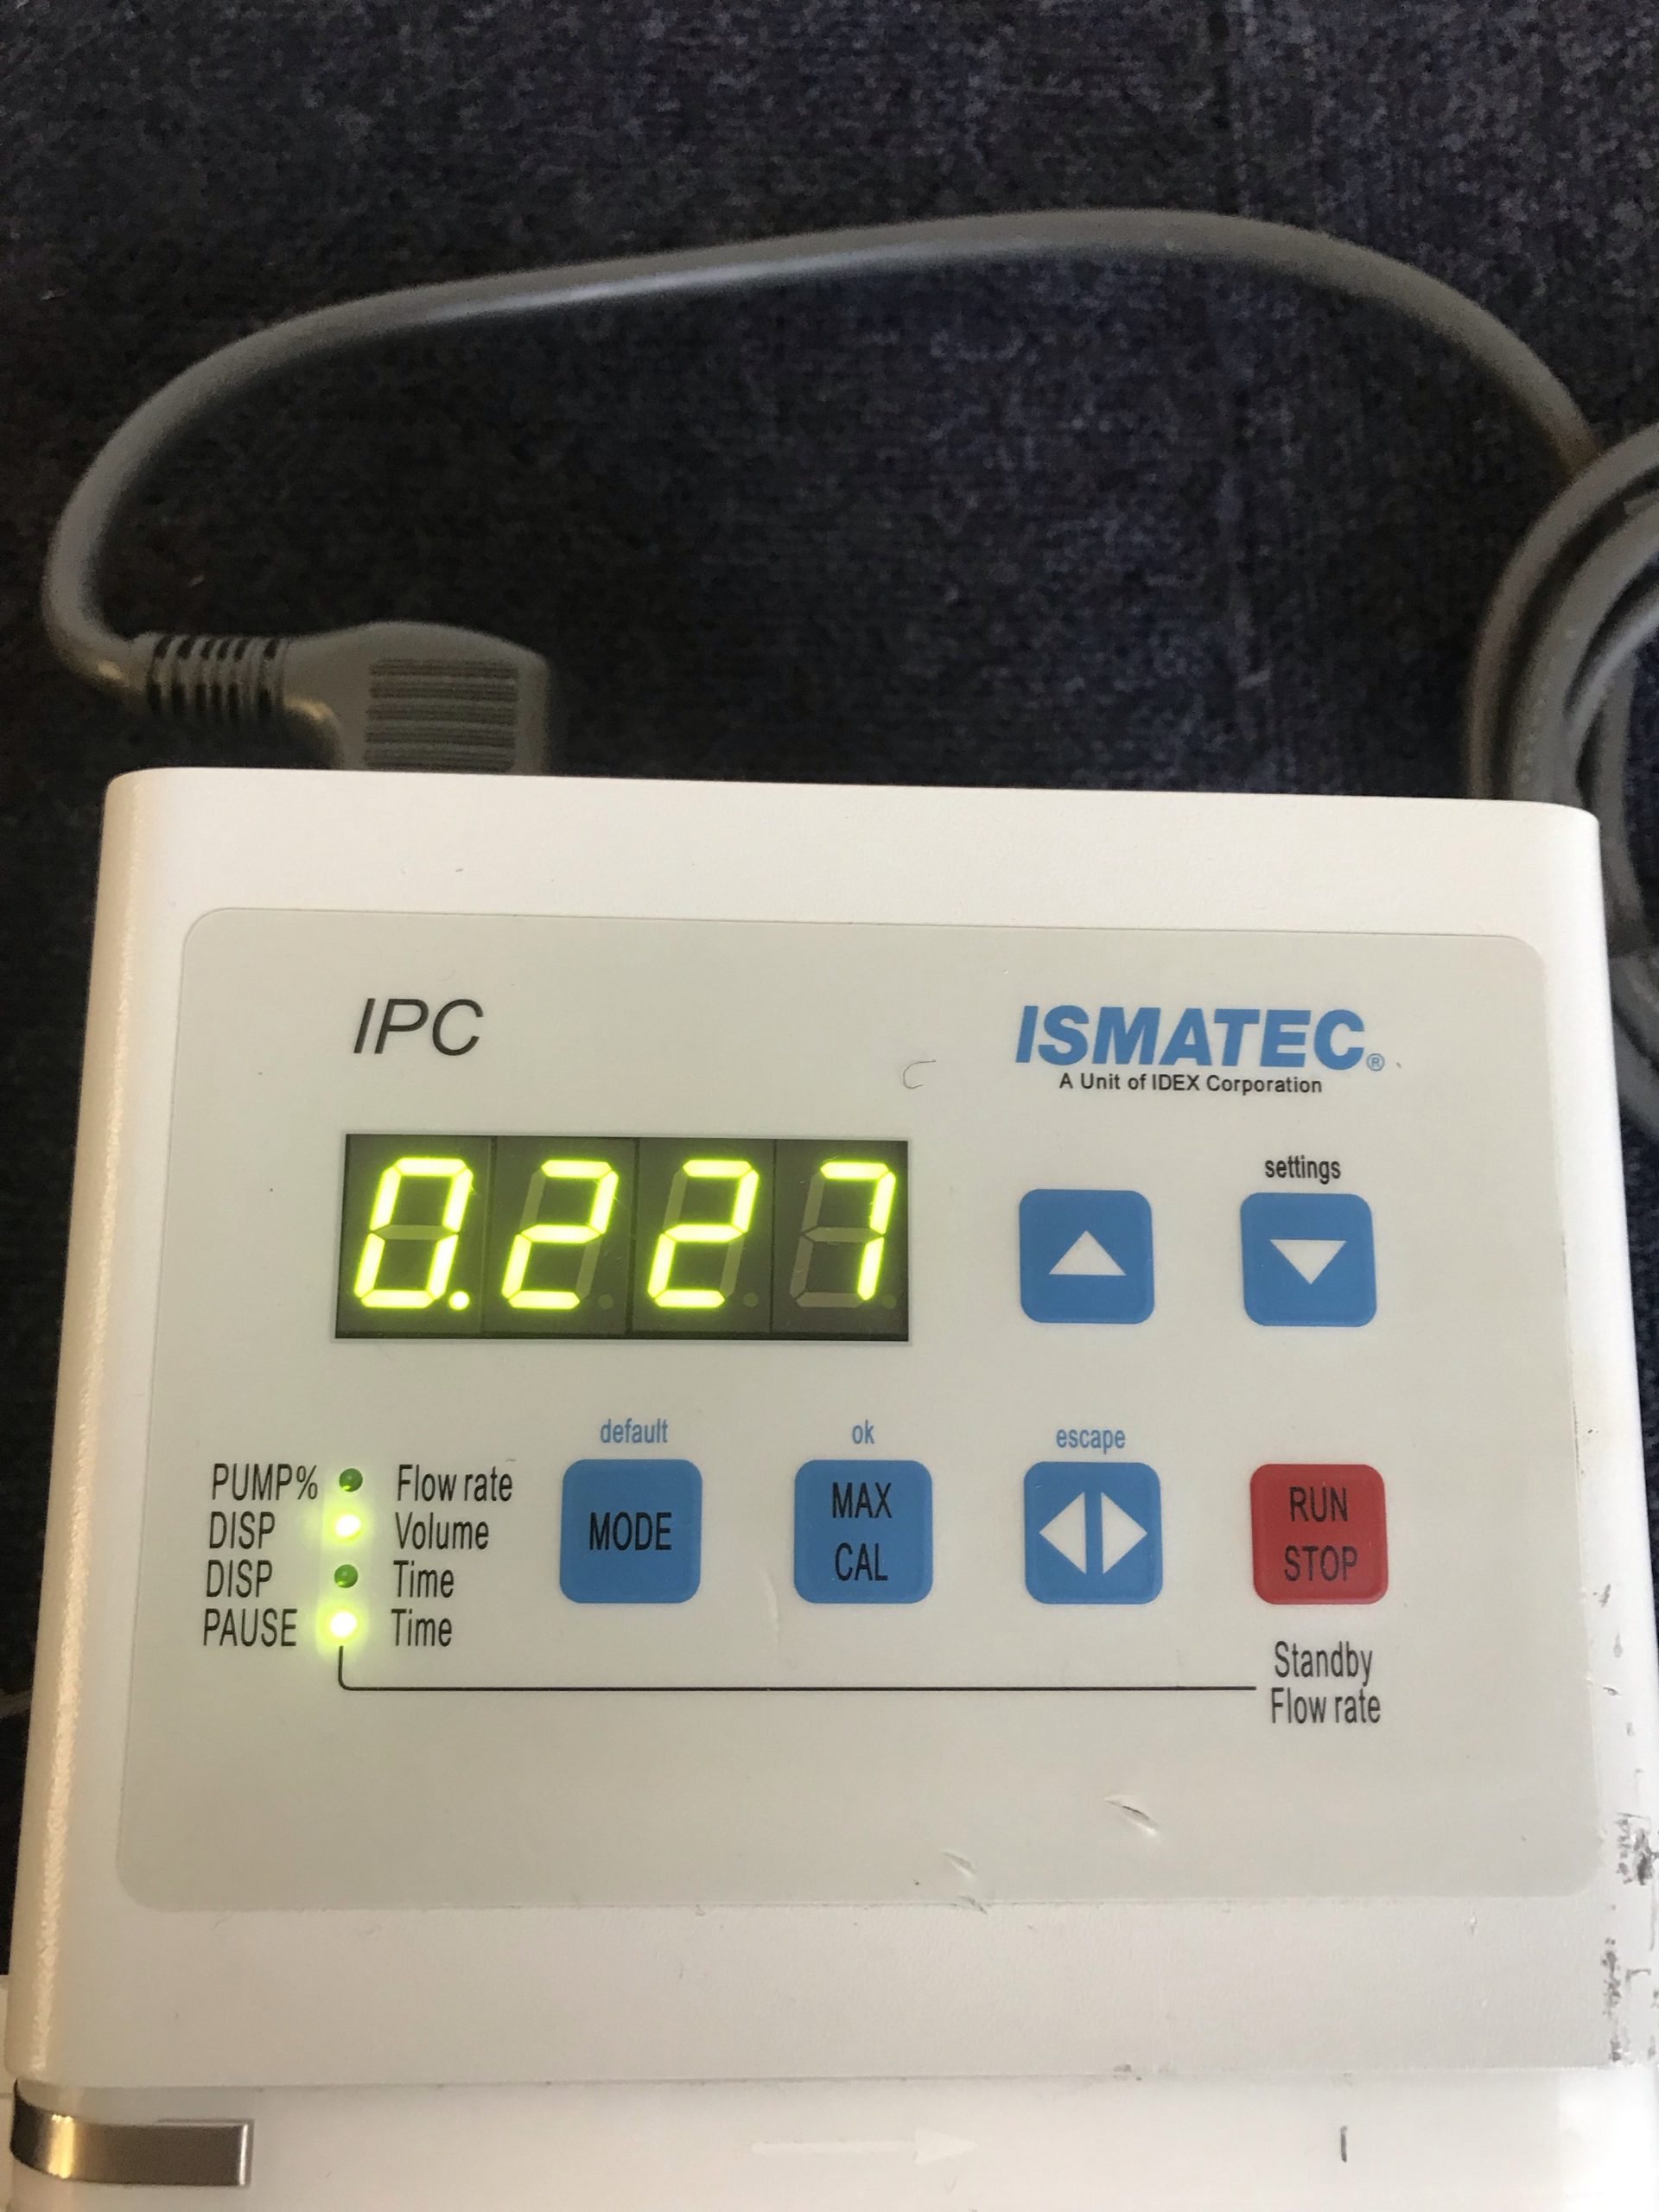 ismatec ipc high precision perstaltic multi-channel dispenser